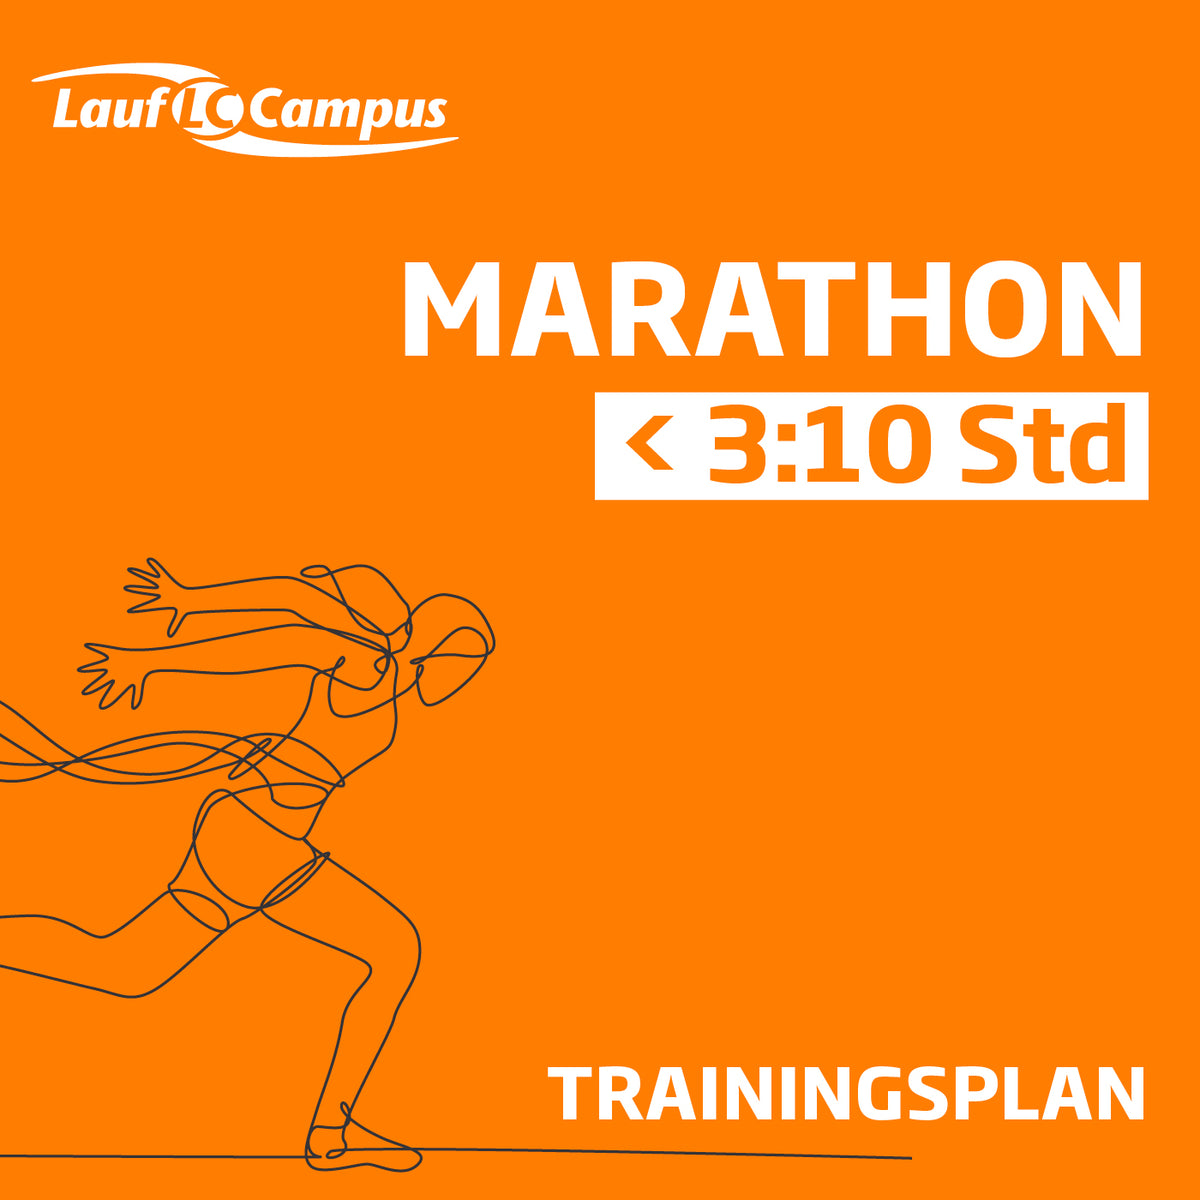 Trainingsplan Marathon unter 3:10 Stunden